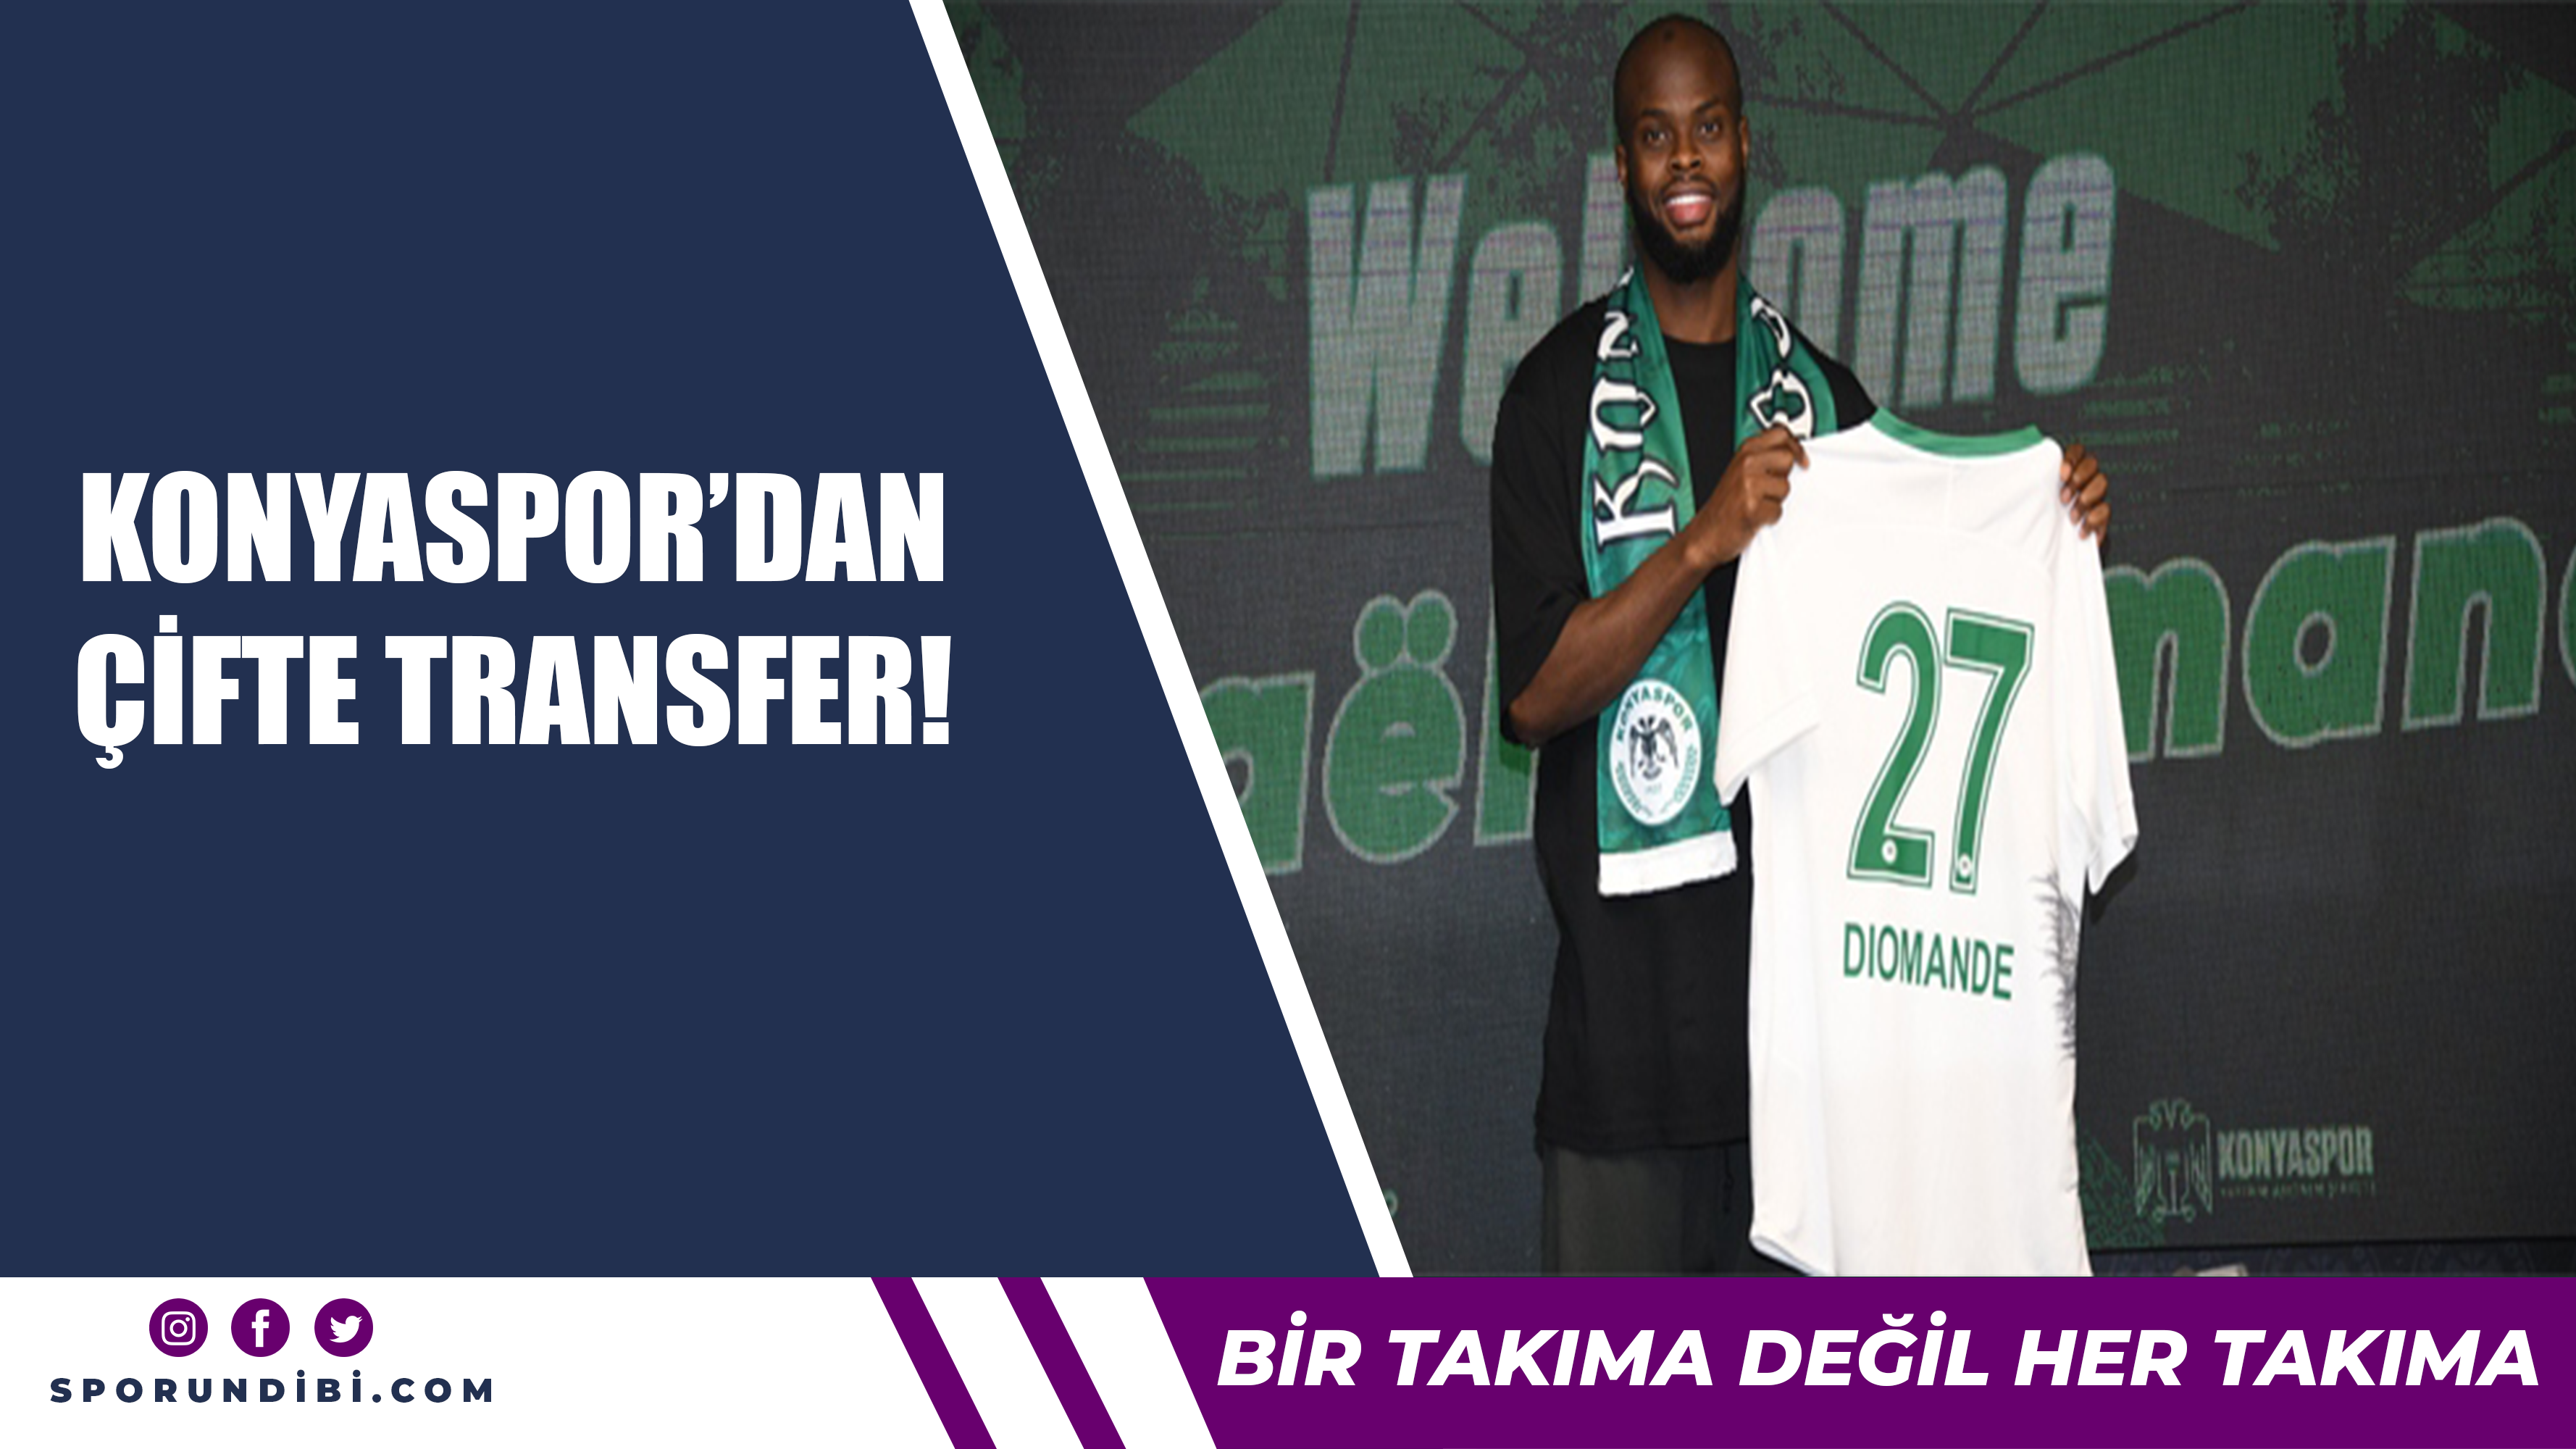 Konyaspor'dan çifte transfer!